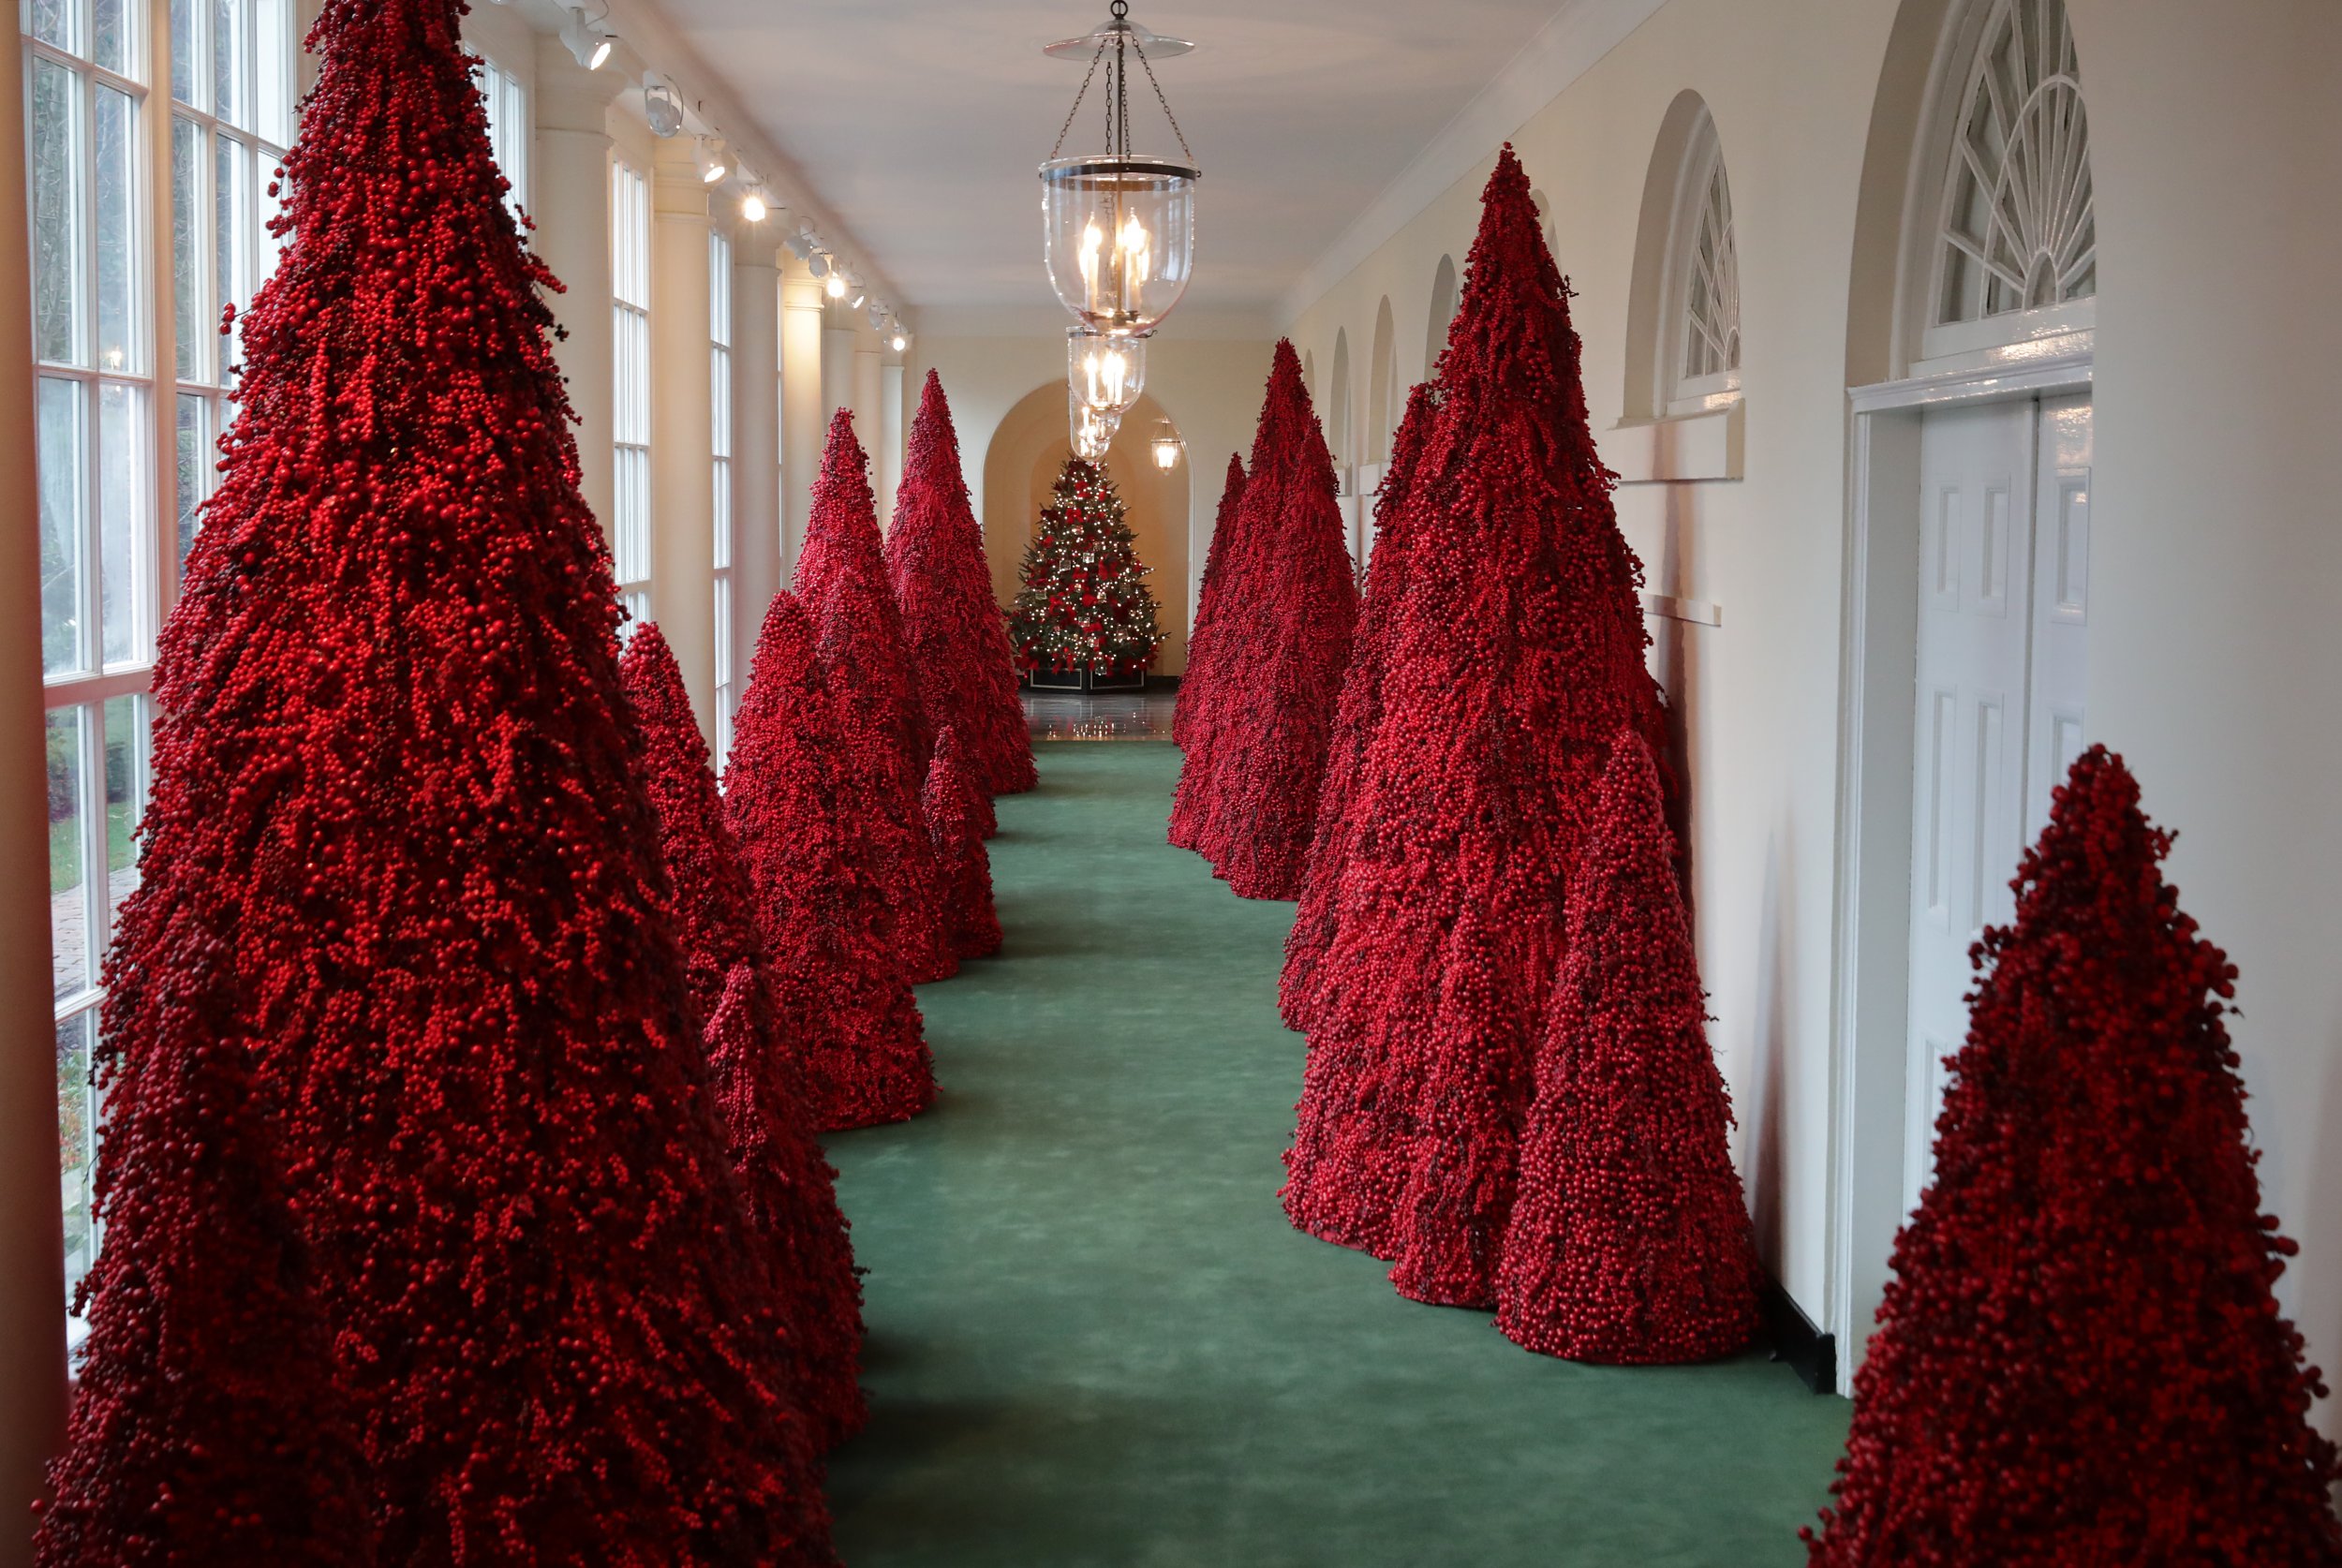 White House Red Christmas Trees Handmaid's Tale Galuh Karnia458